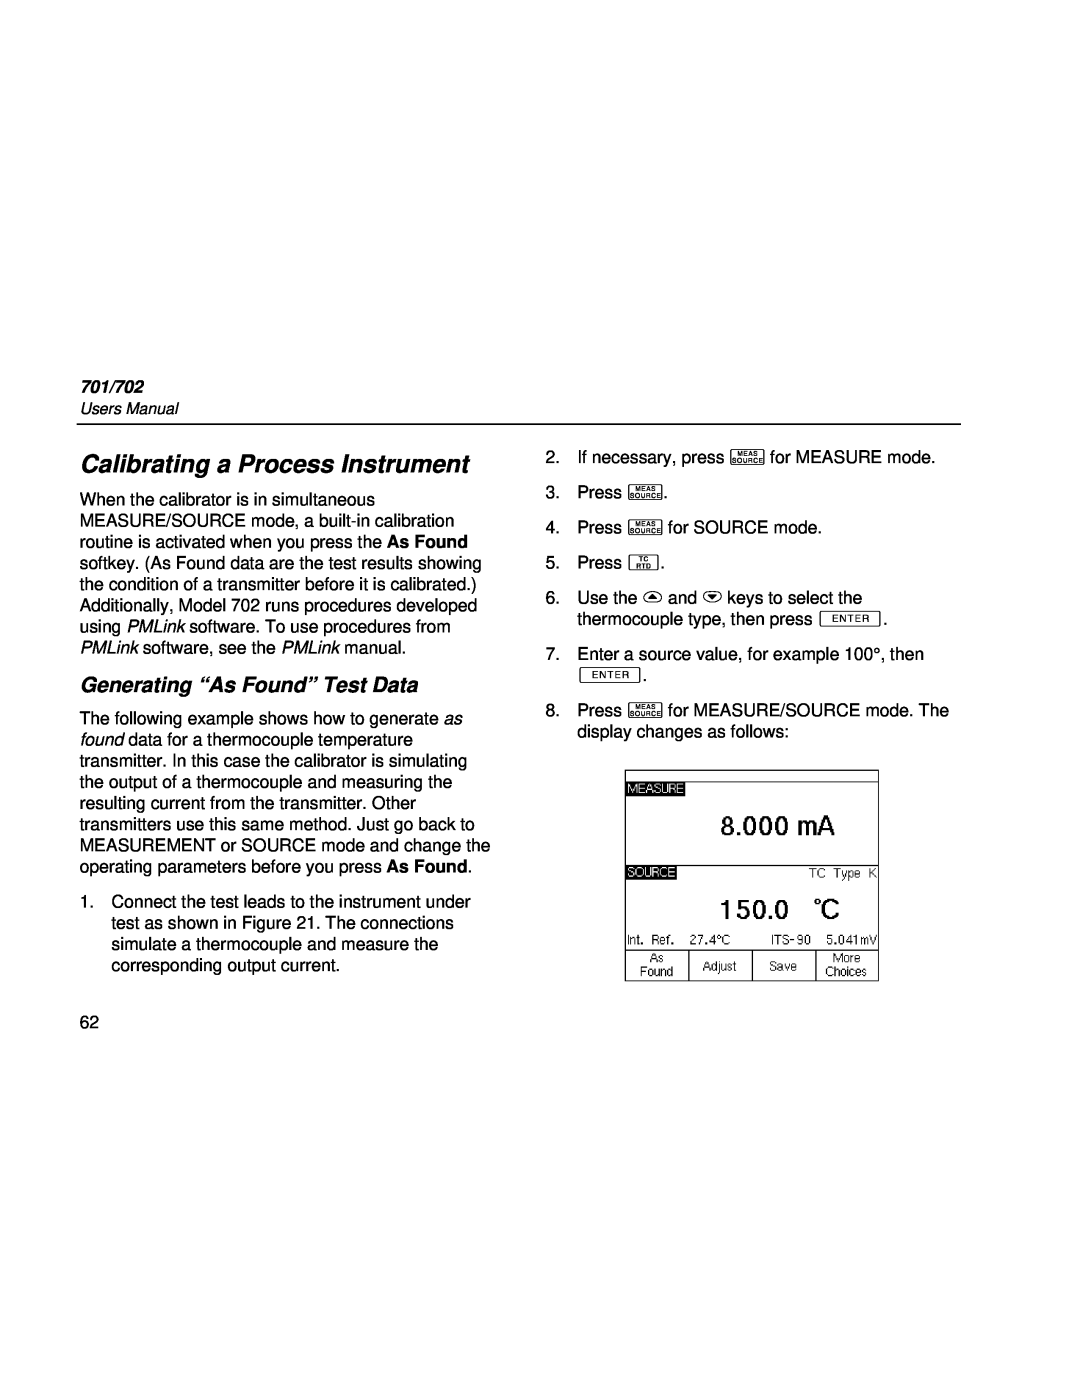 Fluke Rev. 4 user manual Calibrating a Process Instrument, Generating “As Found” Test Data, 701/702 